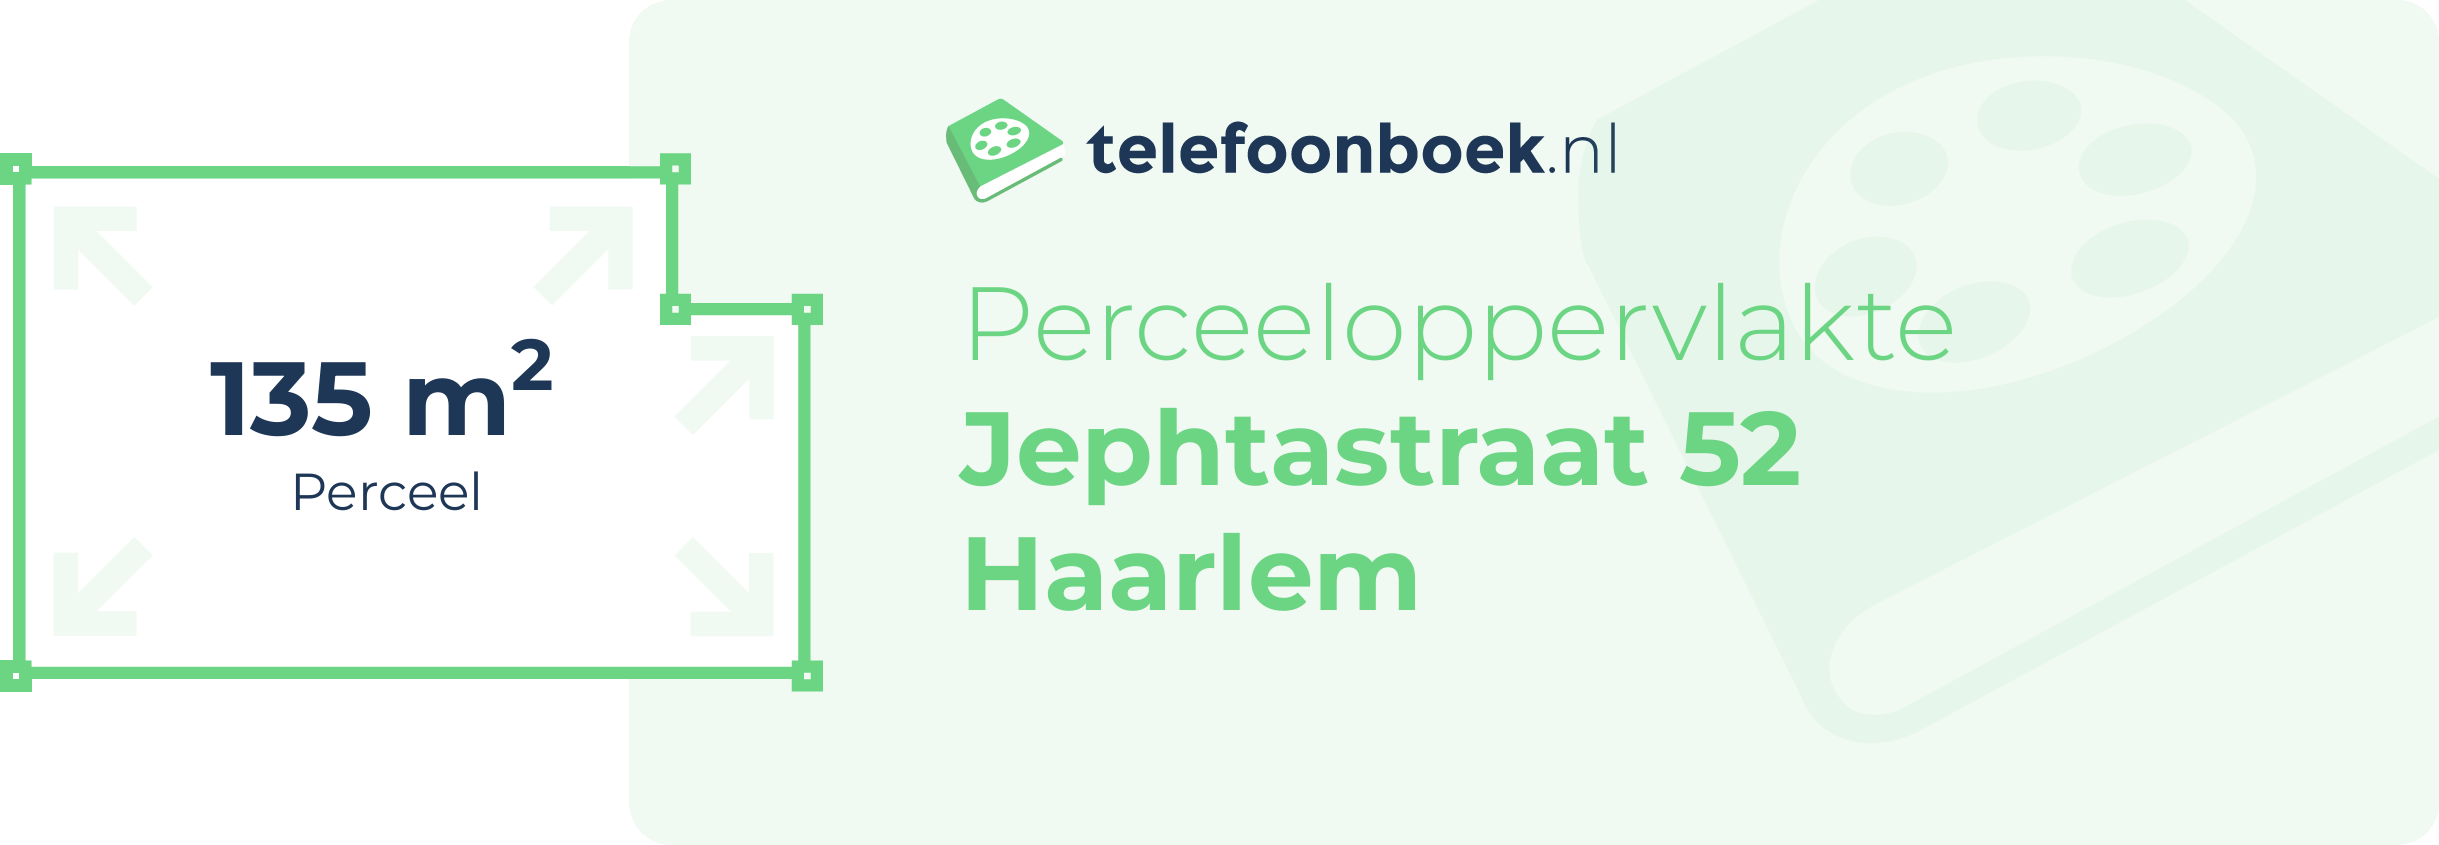 Perceeloppervlakte Jephtastraat 52 Haarlem